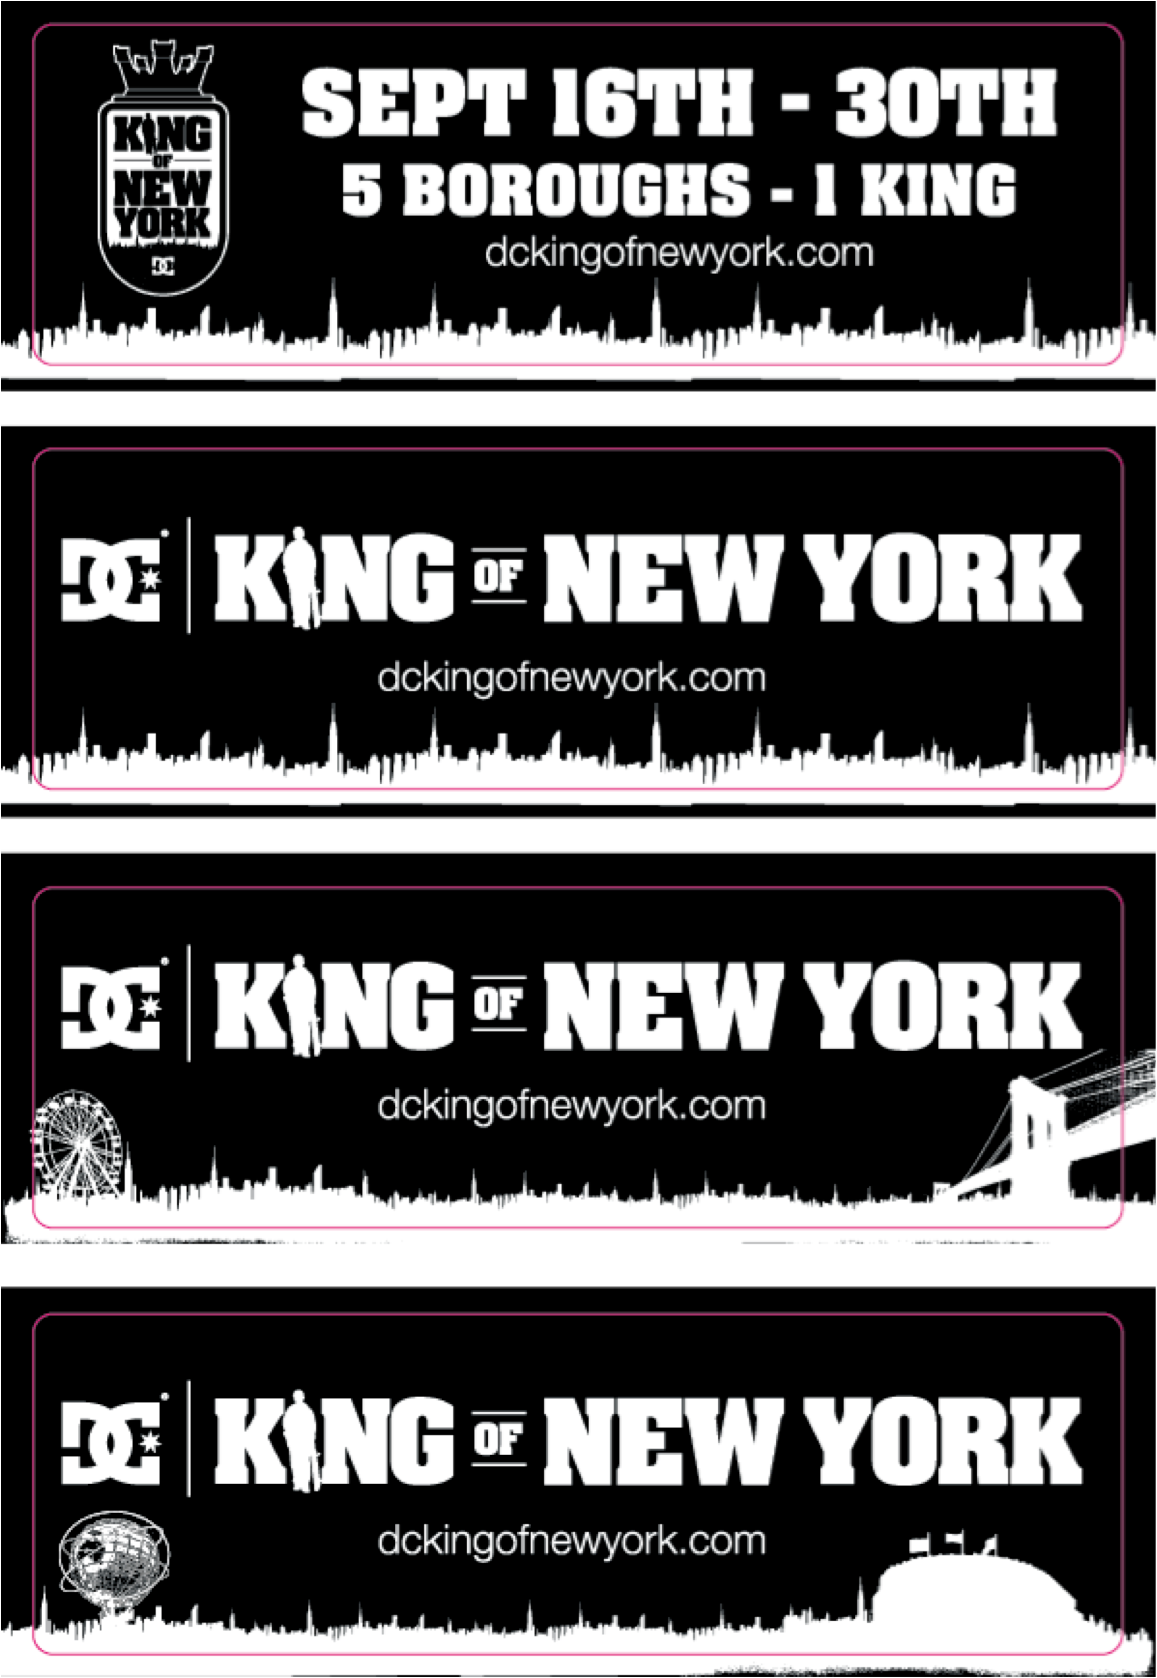 dc shoes DC. KONY King of New York skateboarding new york city Mat Hayward Creative Director event marketing Street Events footwear websites pos